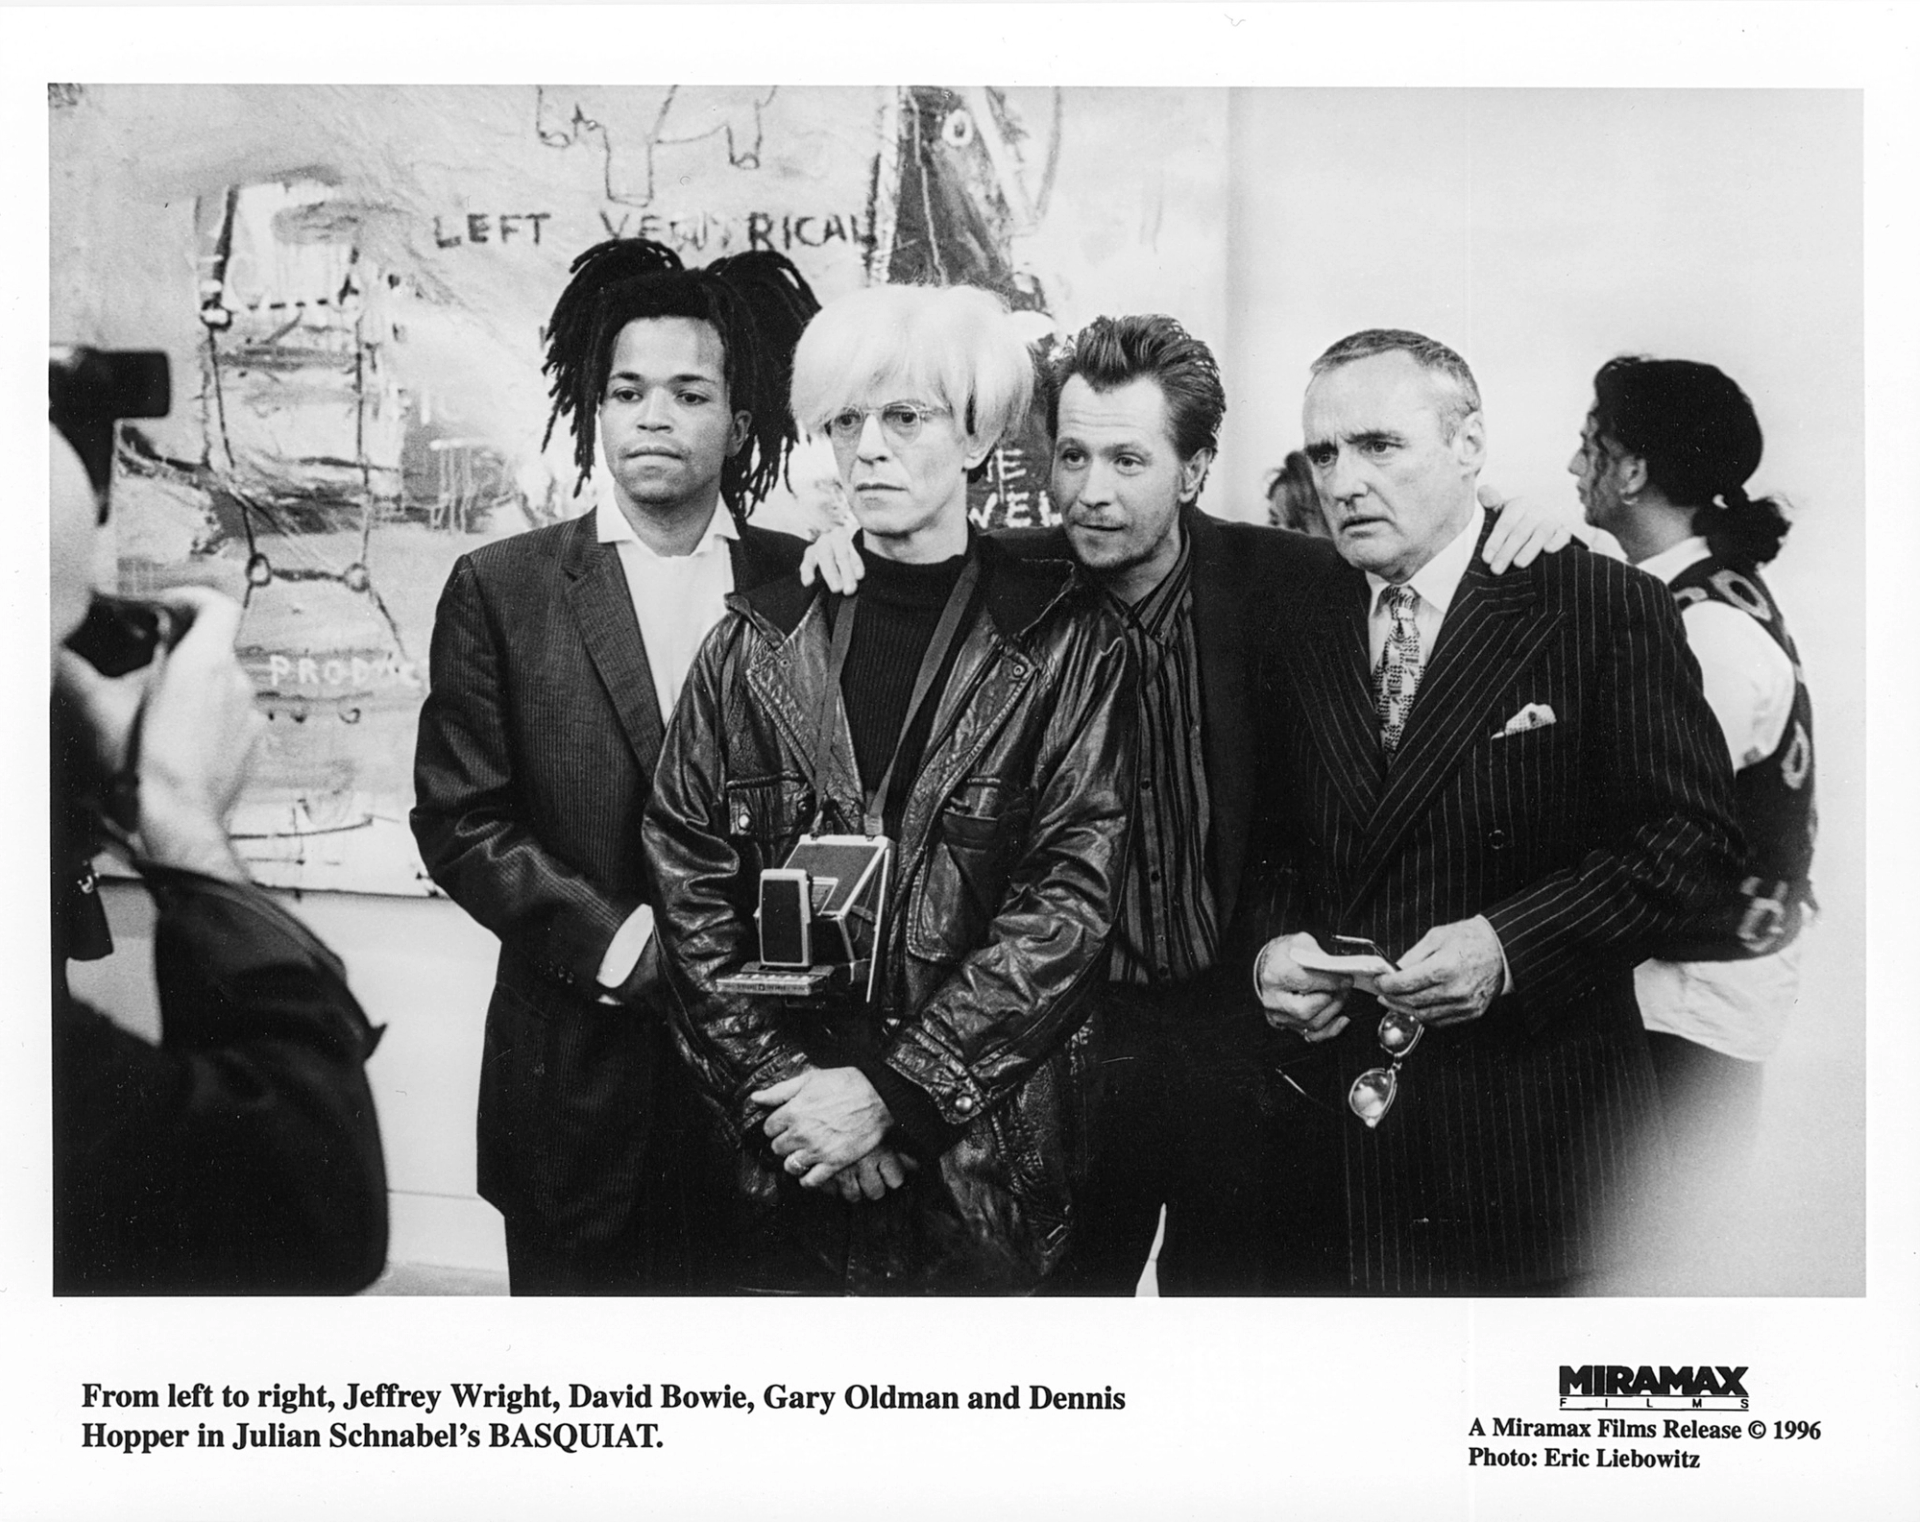 A monochrome image of actor Jeffrey Wright, David Bowie, Gary Oldman and Dennis Hopper in Julian Schnabel's Basquiat film.